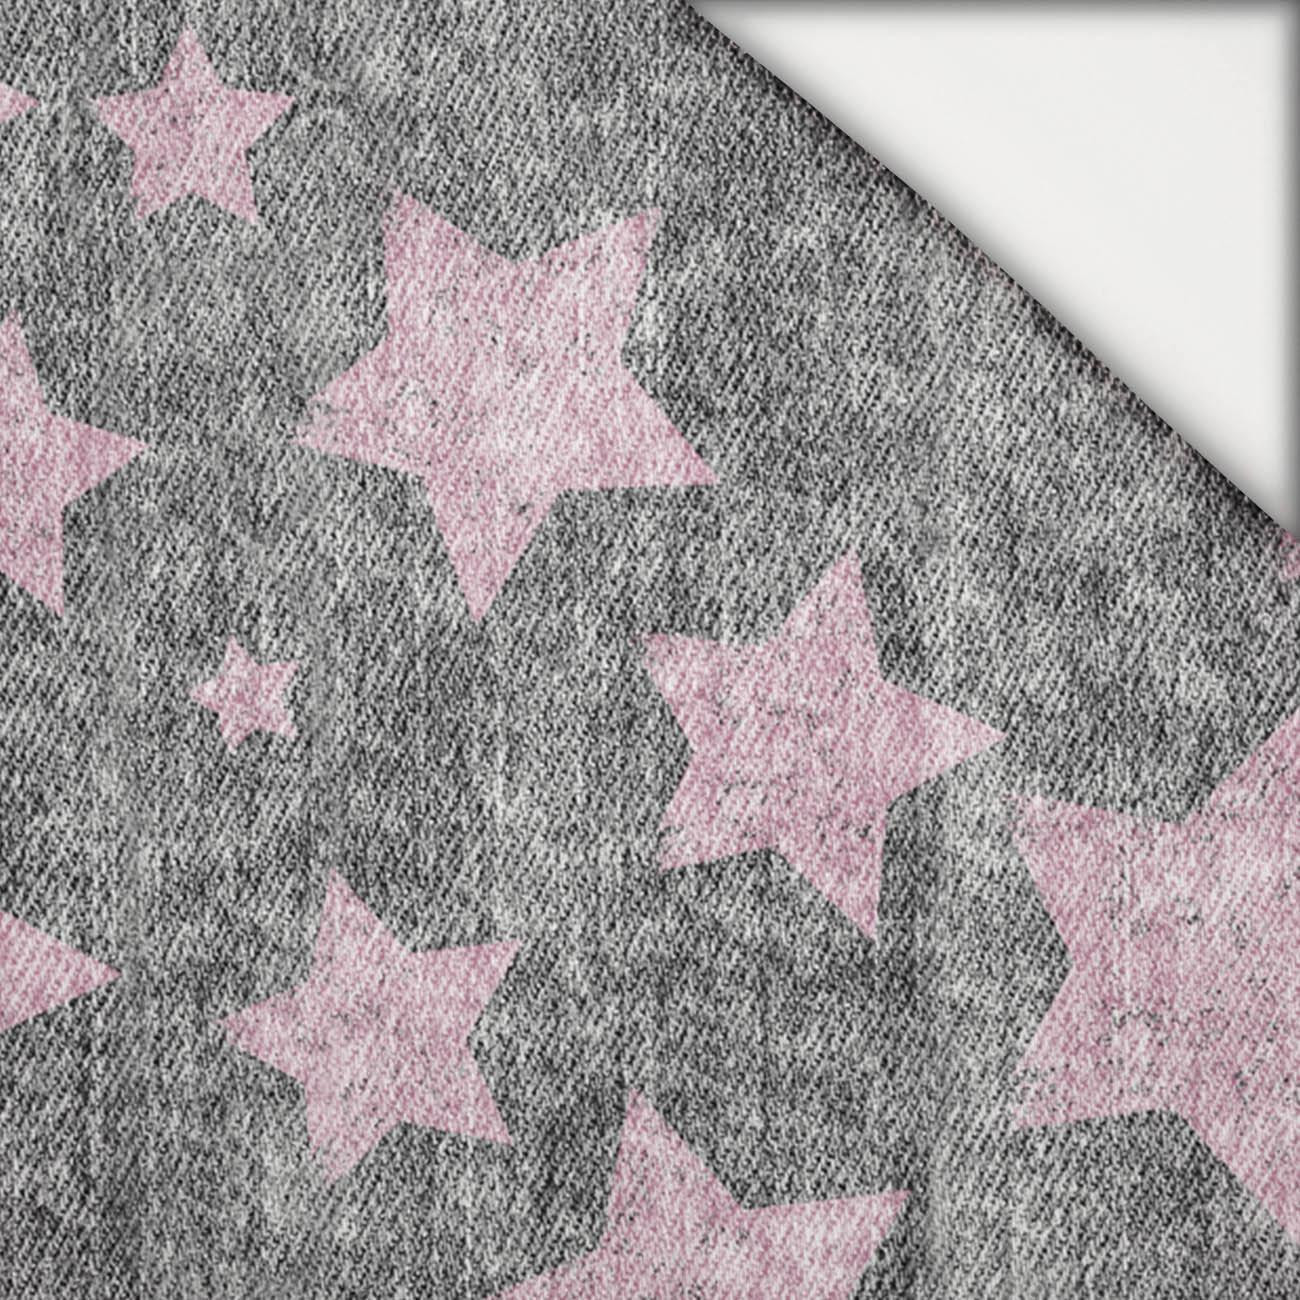 PINK STARS / vinage look jeans (grey) - light brushed knitwear